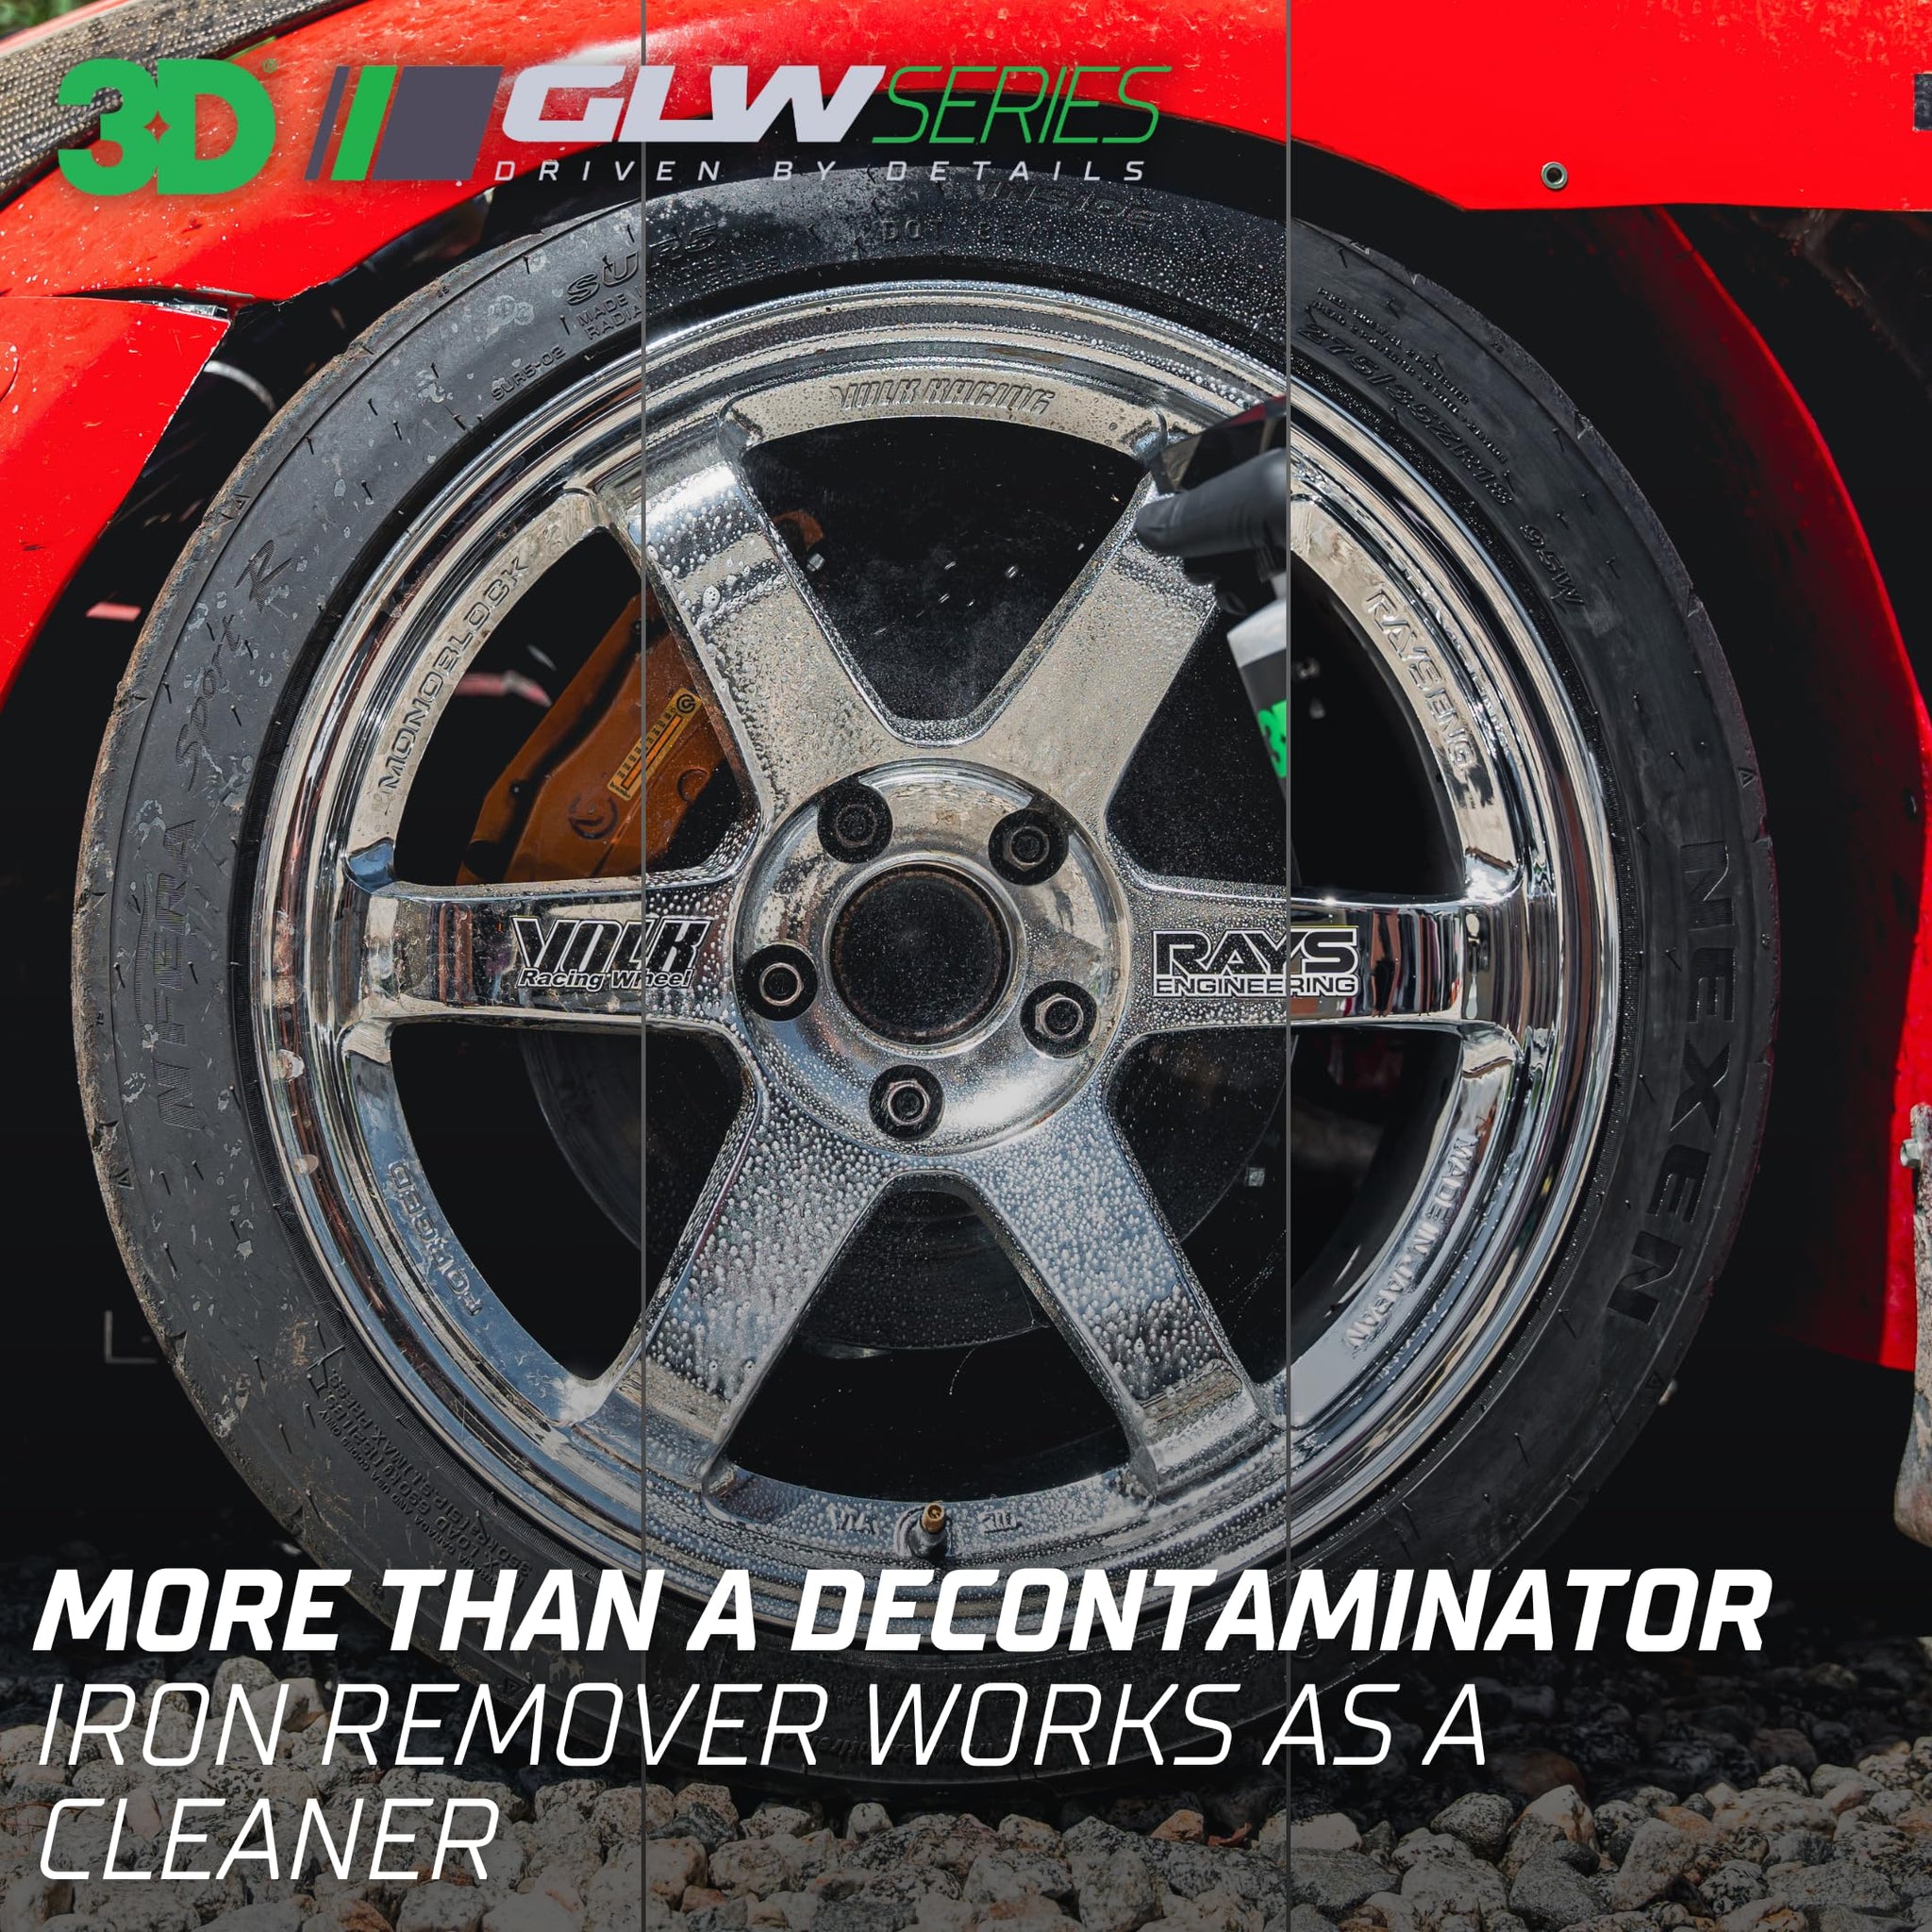 3D Glw Series Iron Remover - 64 oz